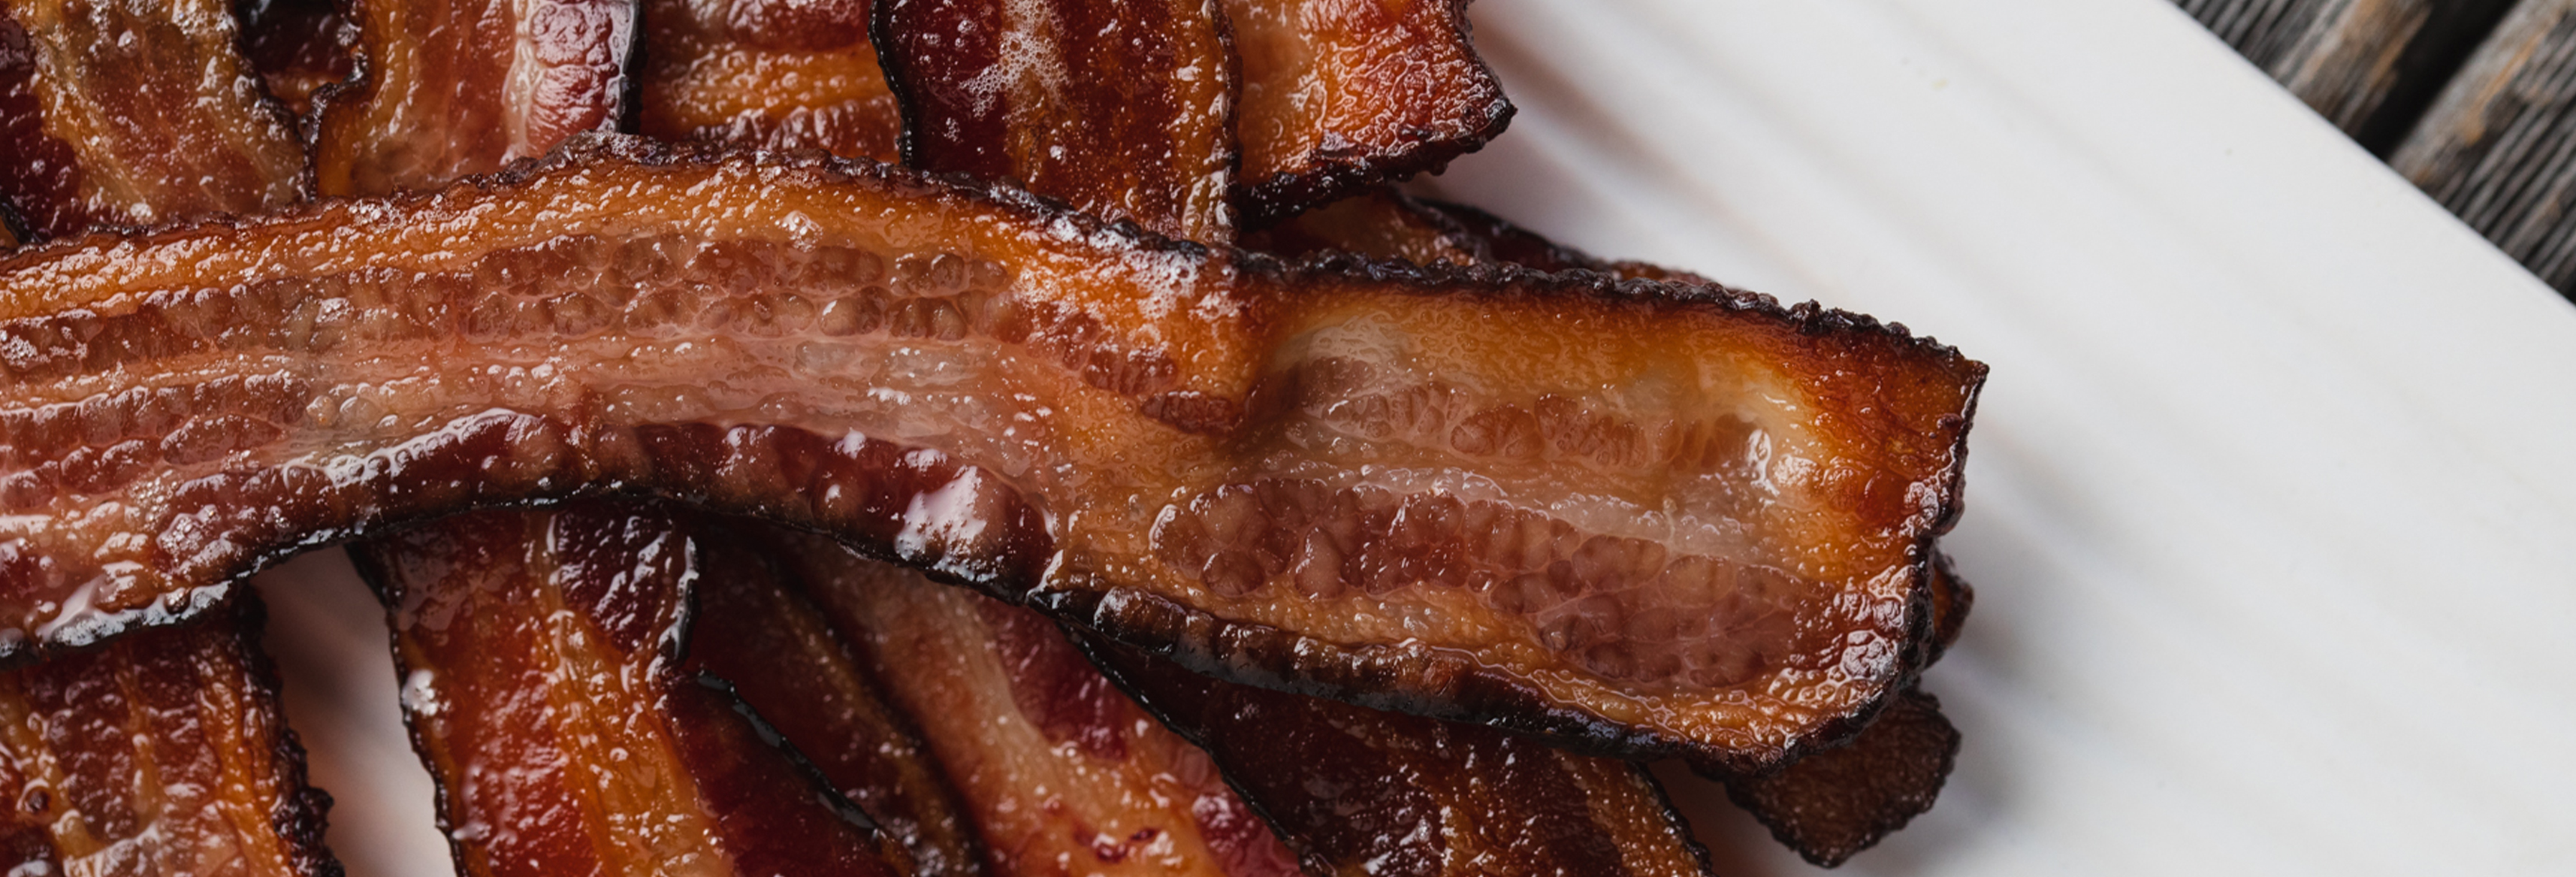 NCS Meets Demand for Prop 12 Compliant Bacon